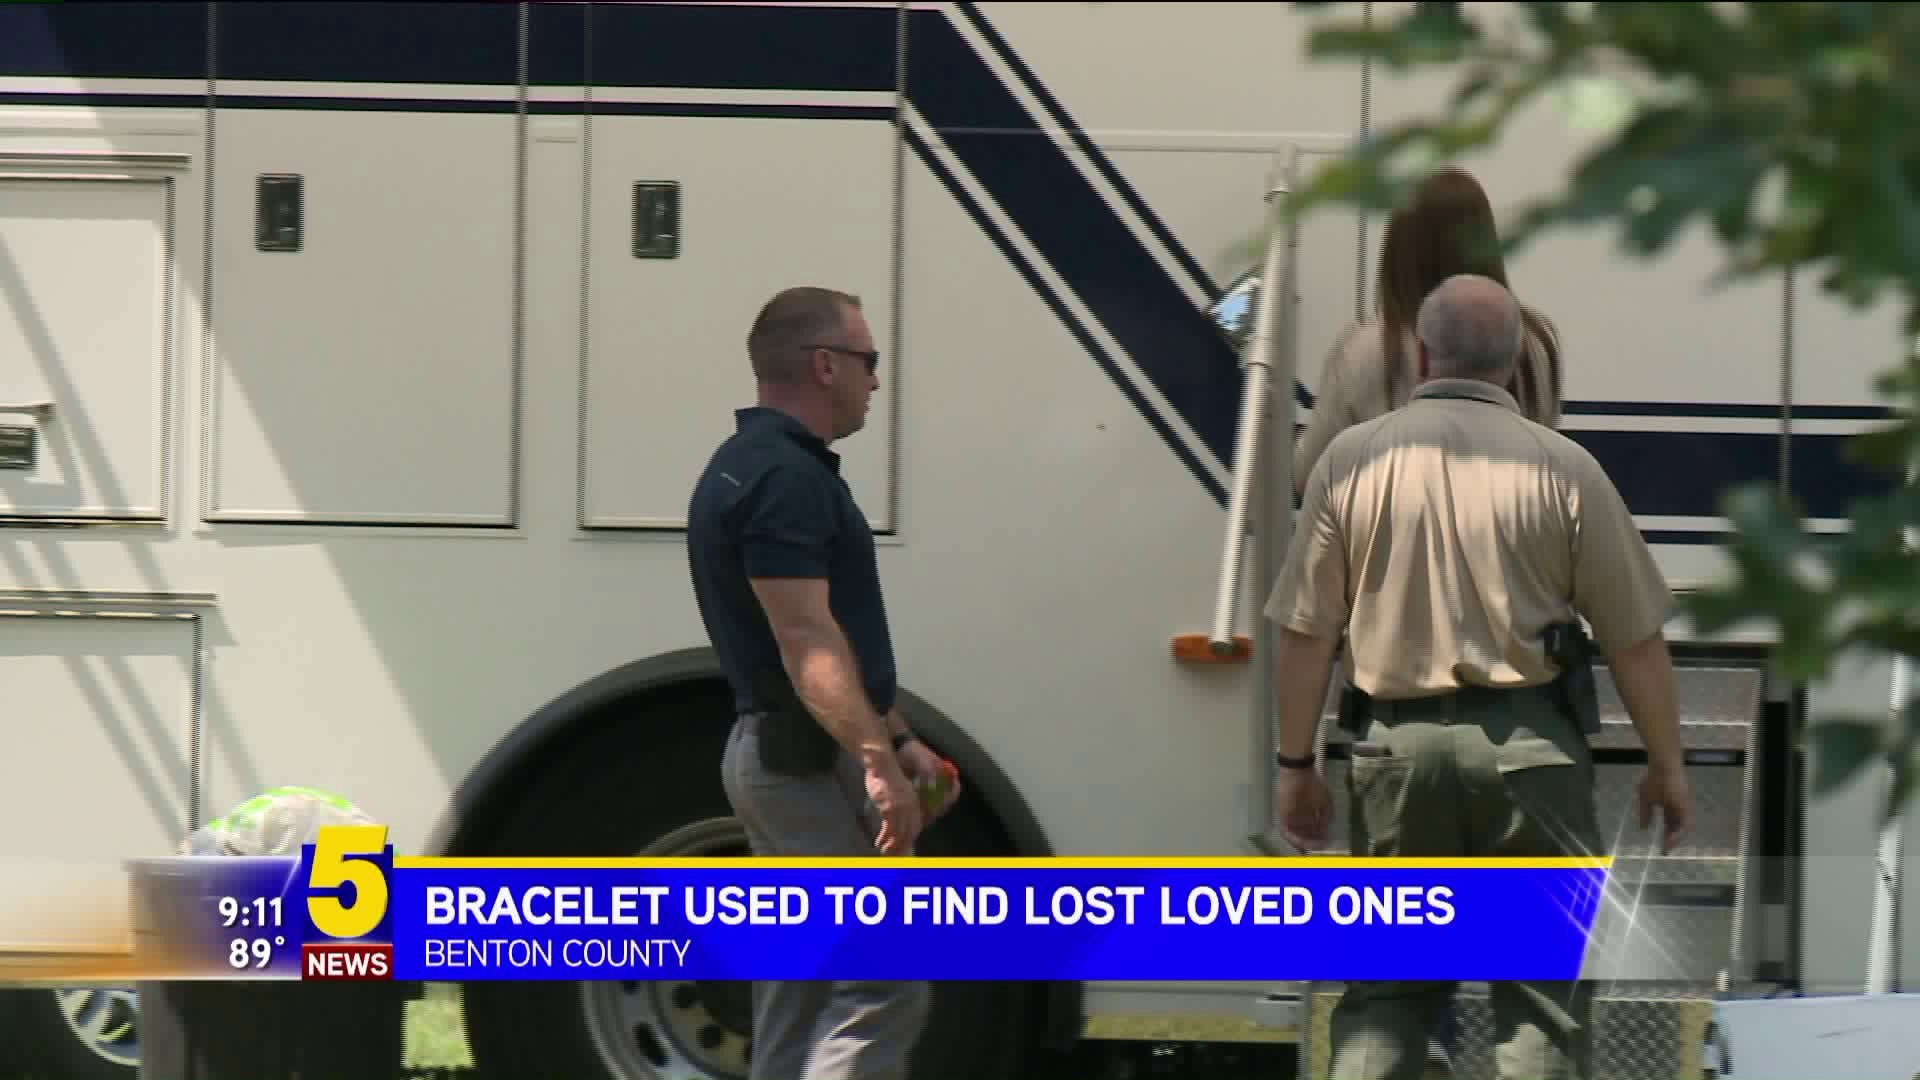 Bracelet Used To Find Lost Loved Ones